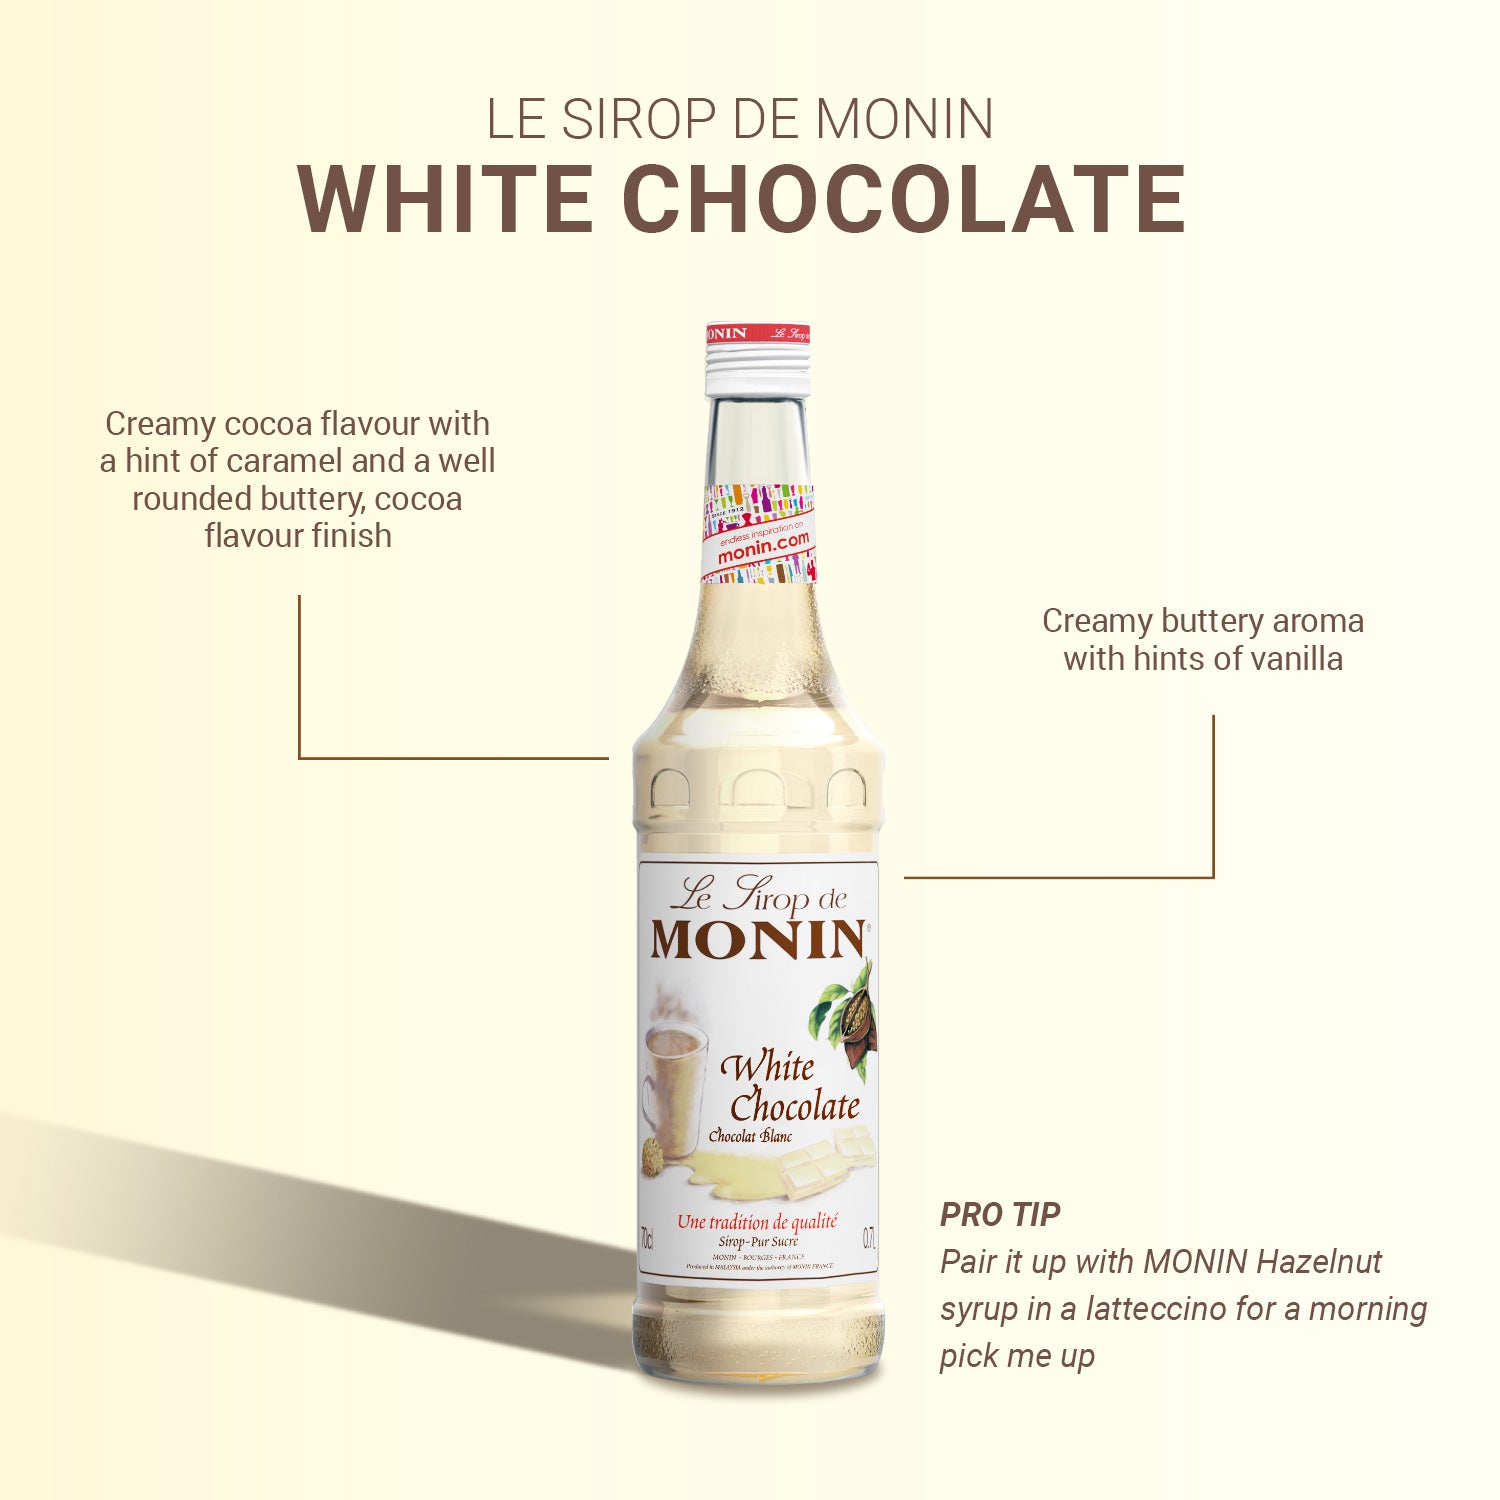 Monin Sirop de Chocolat Blanc - White Chocolate Syrup, France